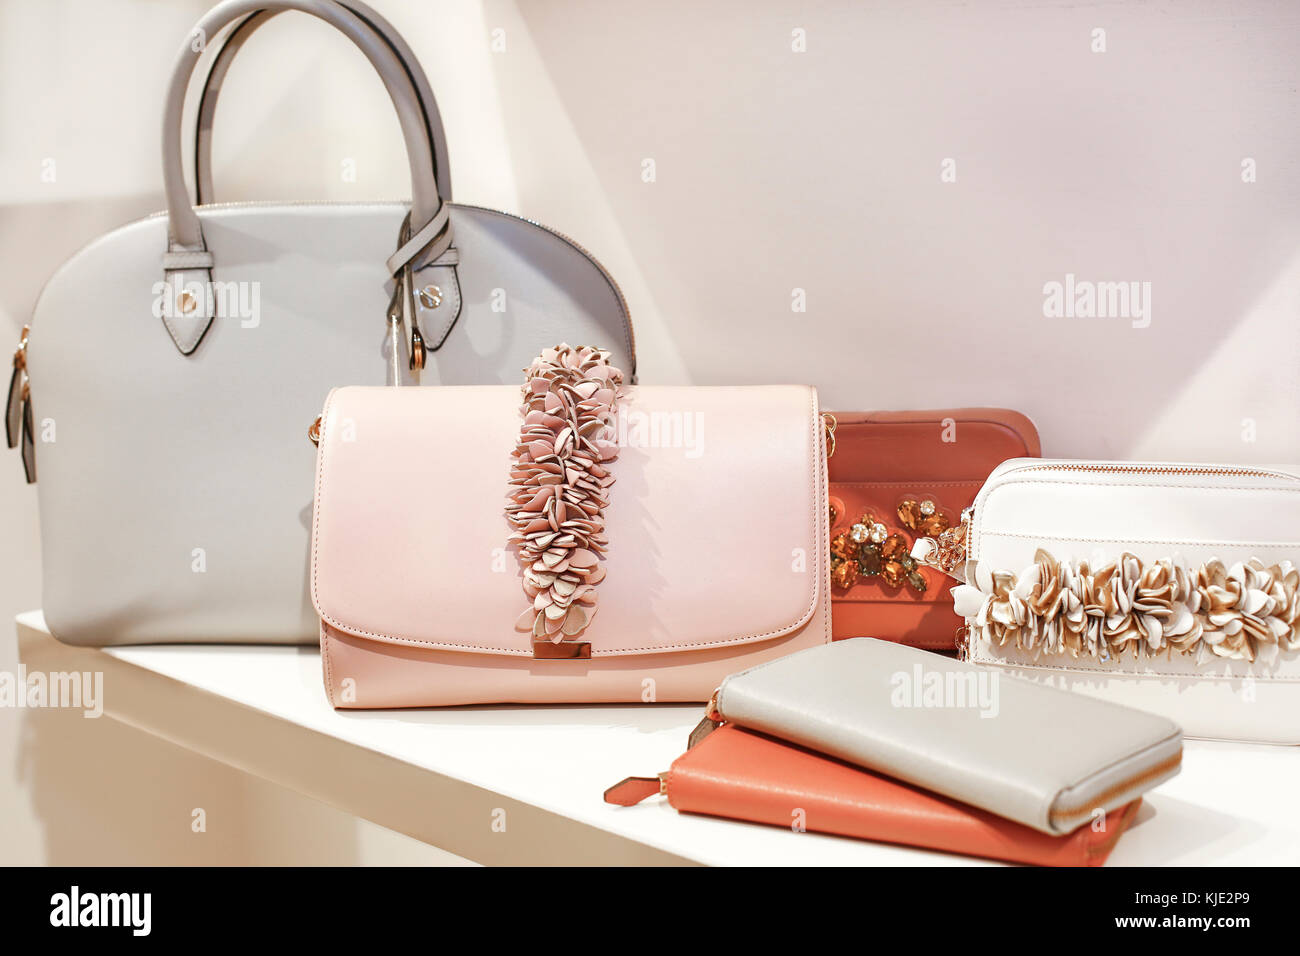 Luxury purses on display Stock Photo